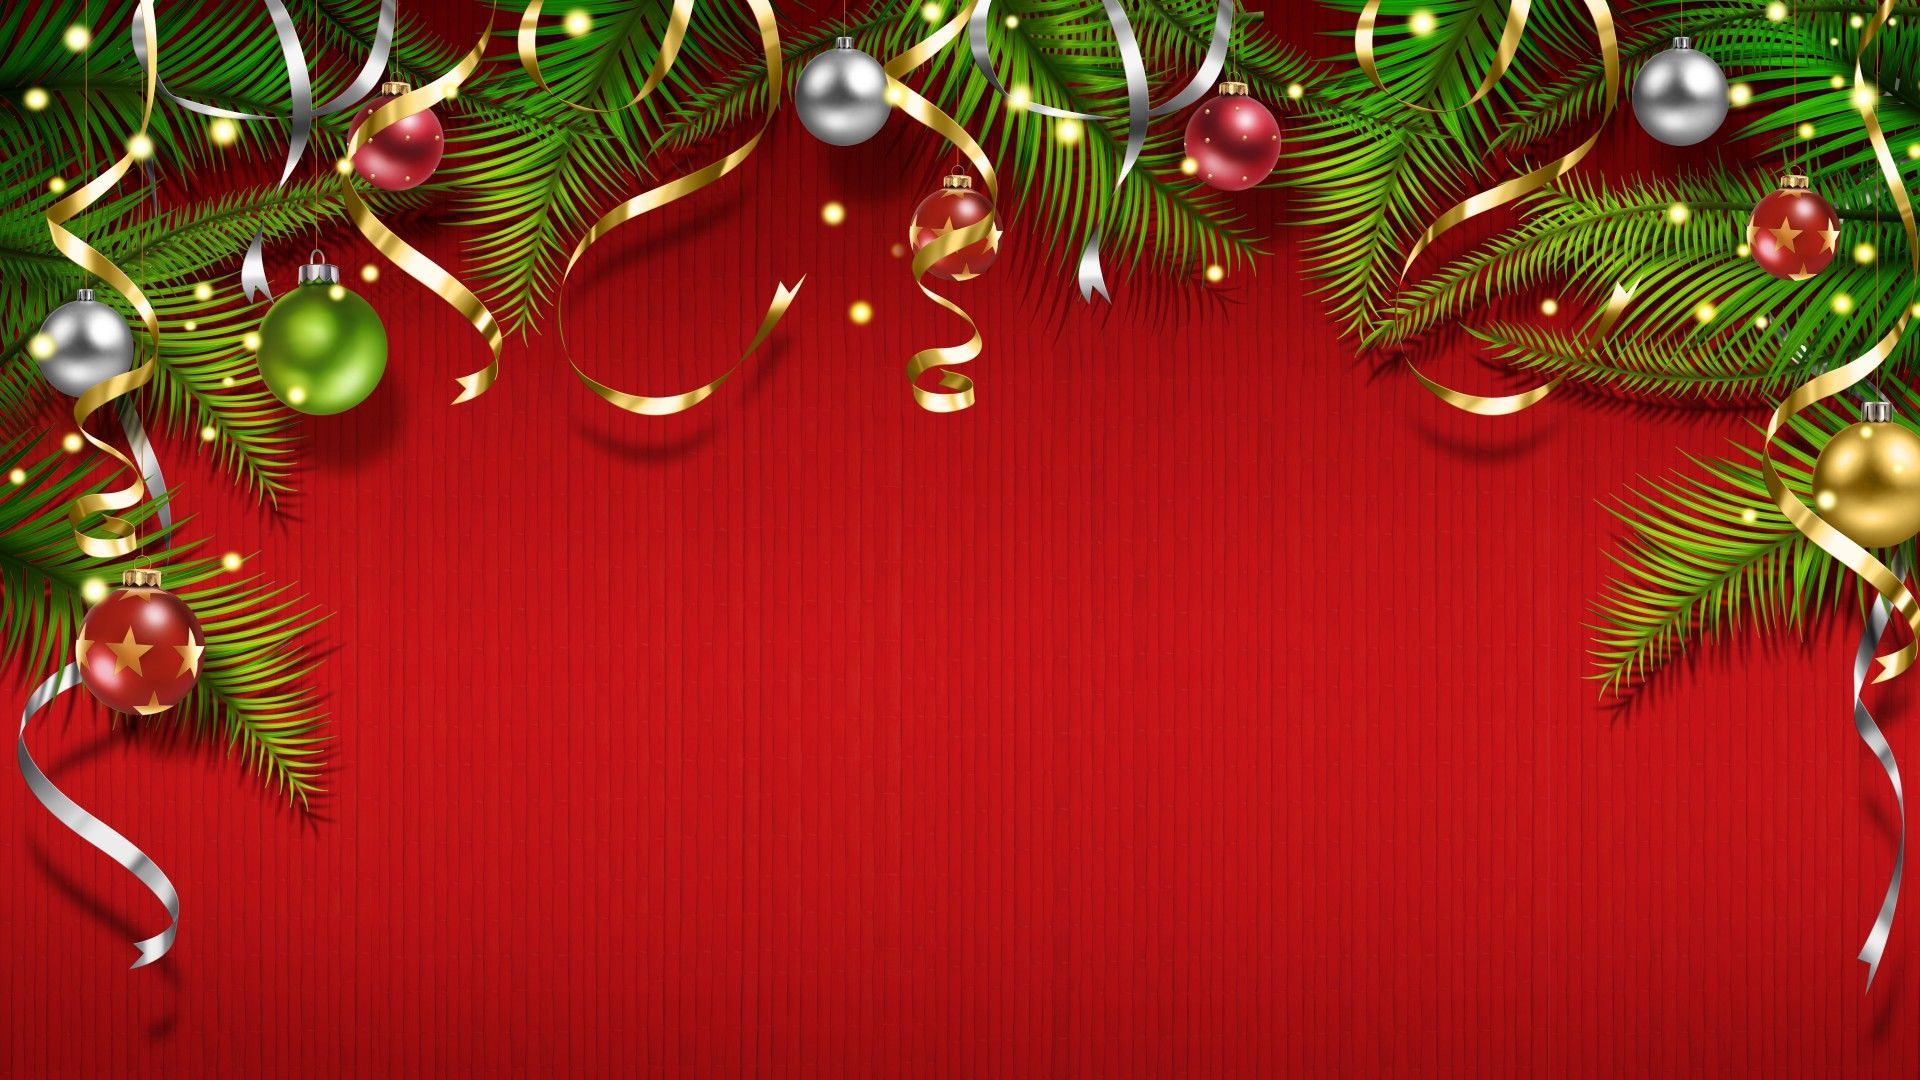 Christmas Decorations Wallpaper, Christmas Decorations HD. Merry christmas image, Christmas wallpaper hd, Merry christmas wishes image